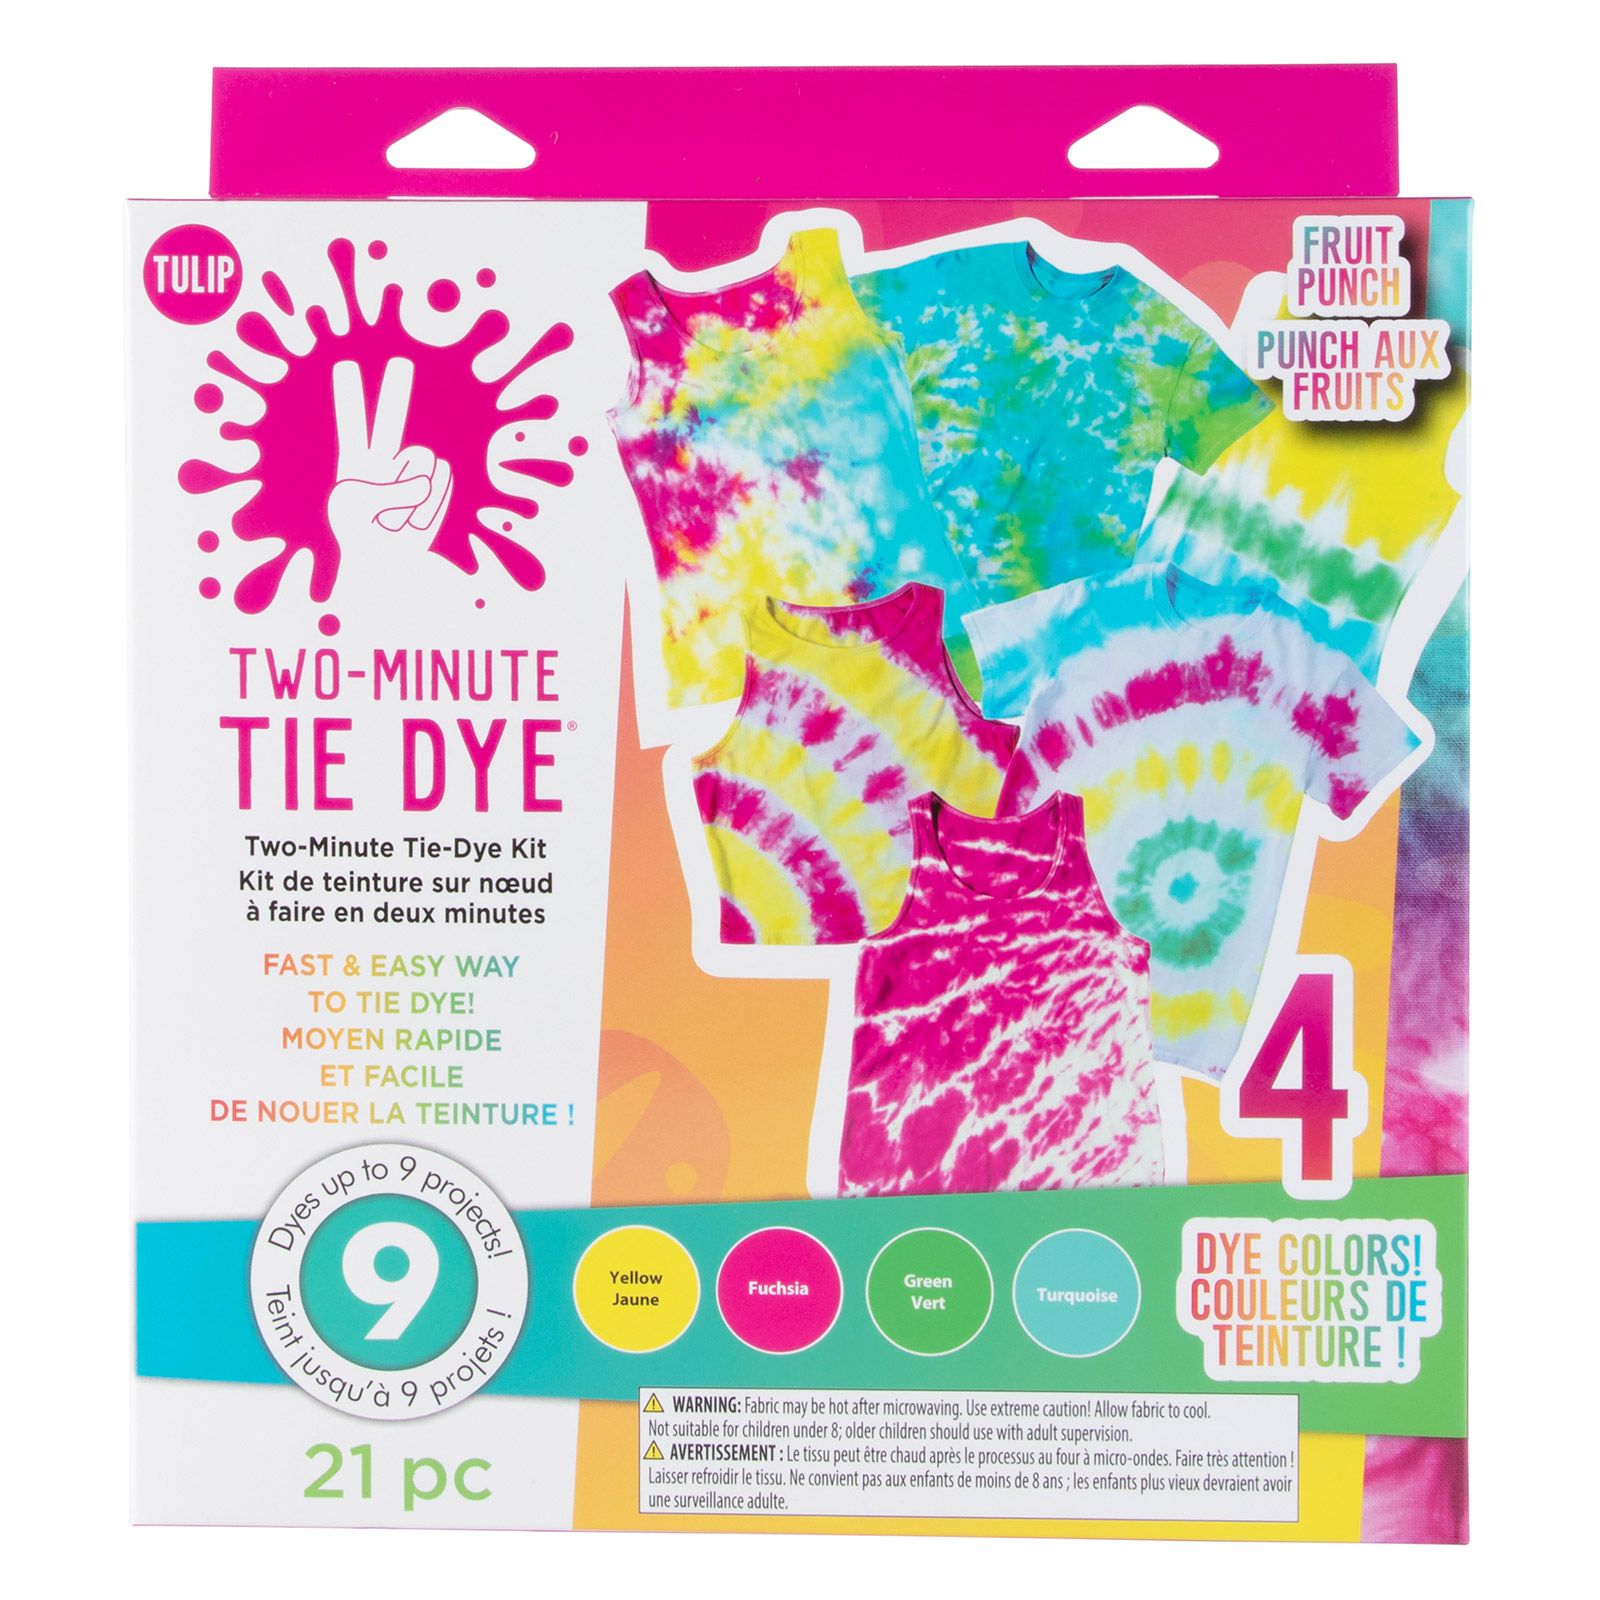 Tulip one-step tie dye • Two minute tie dye kit Fruit punch